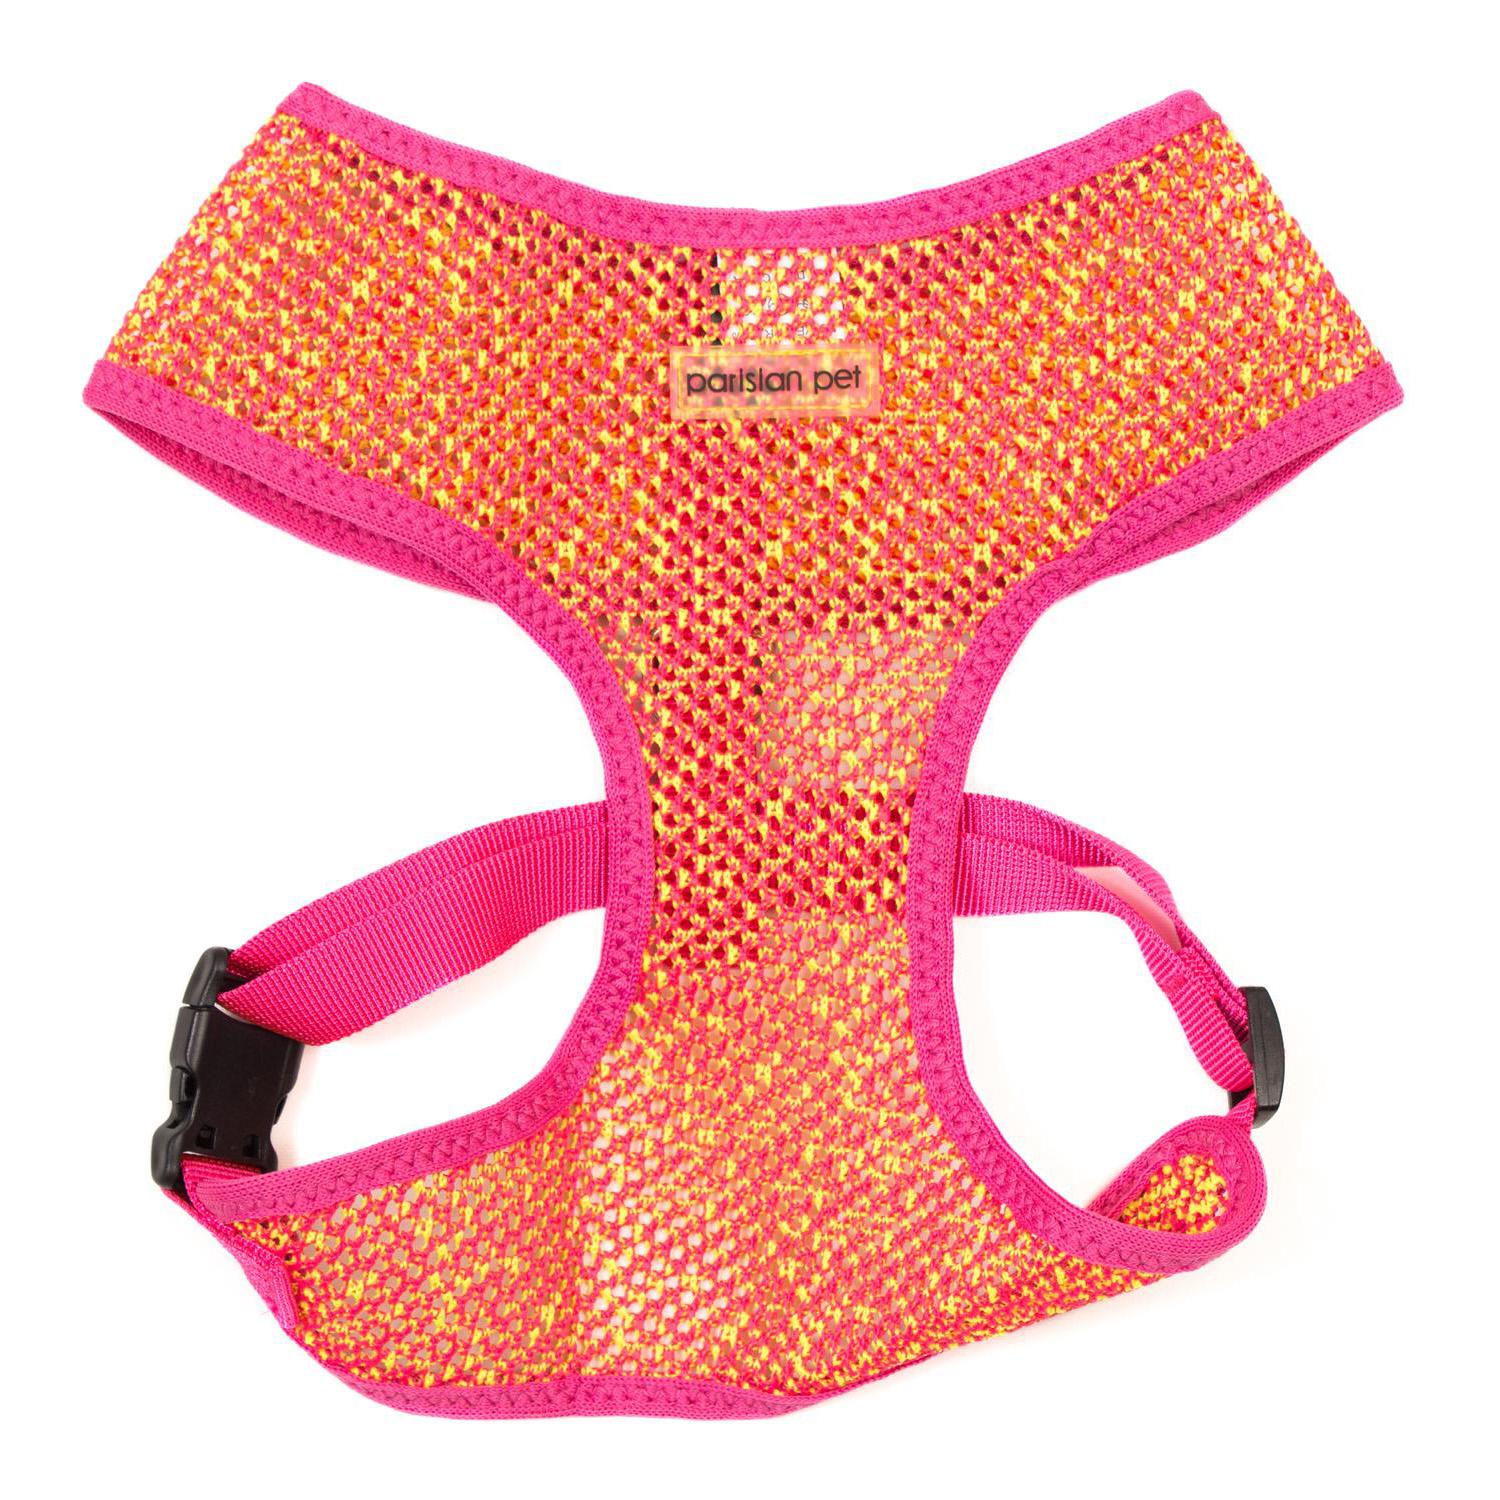 Parisian Pet Sport Net Dog Harness - Pink/Yellow